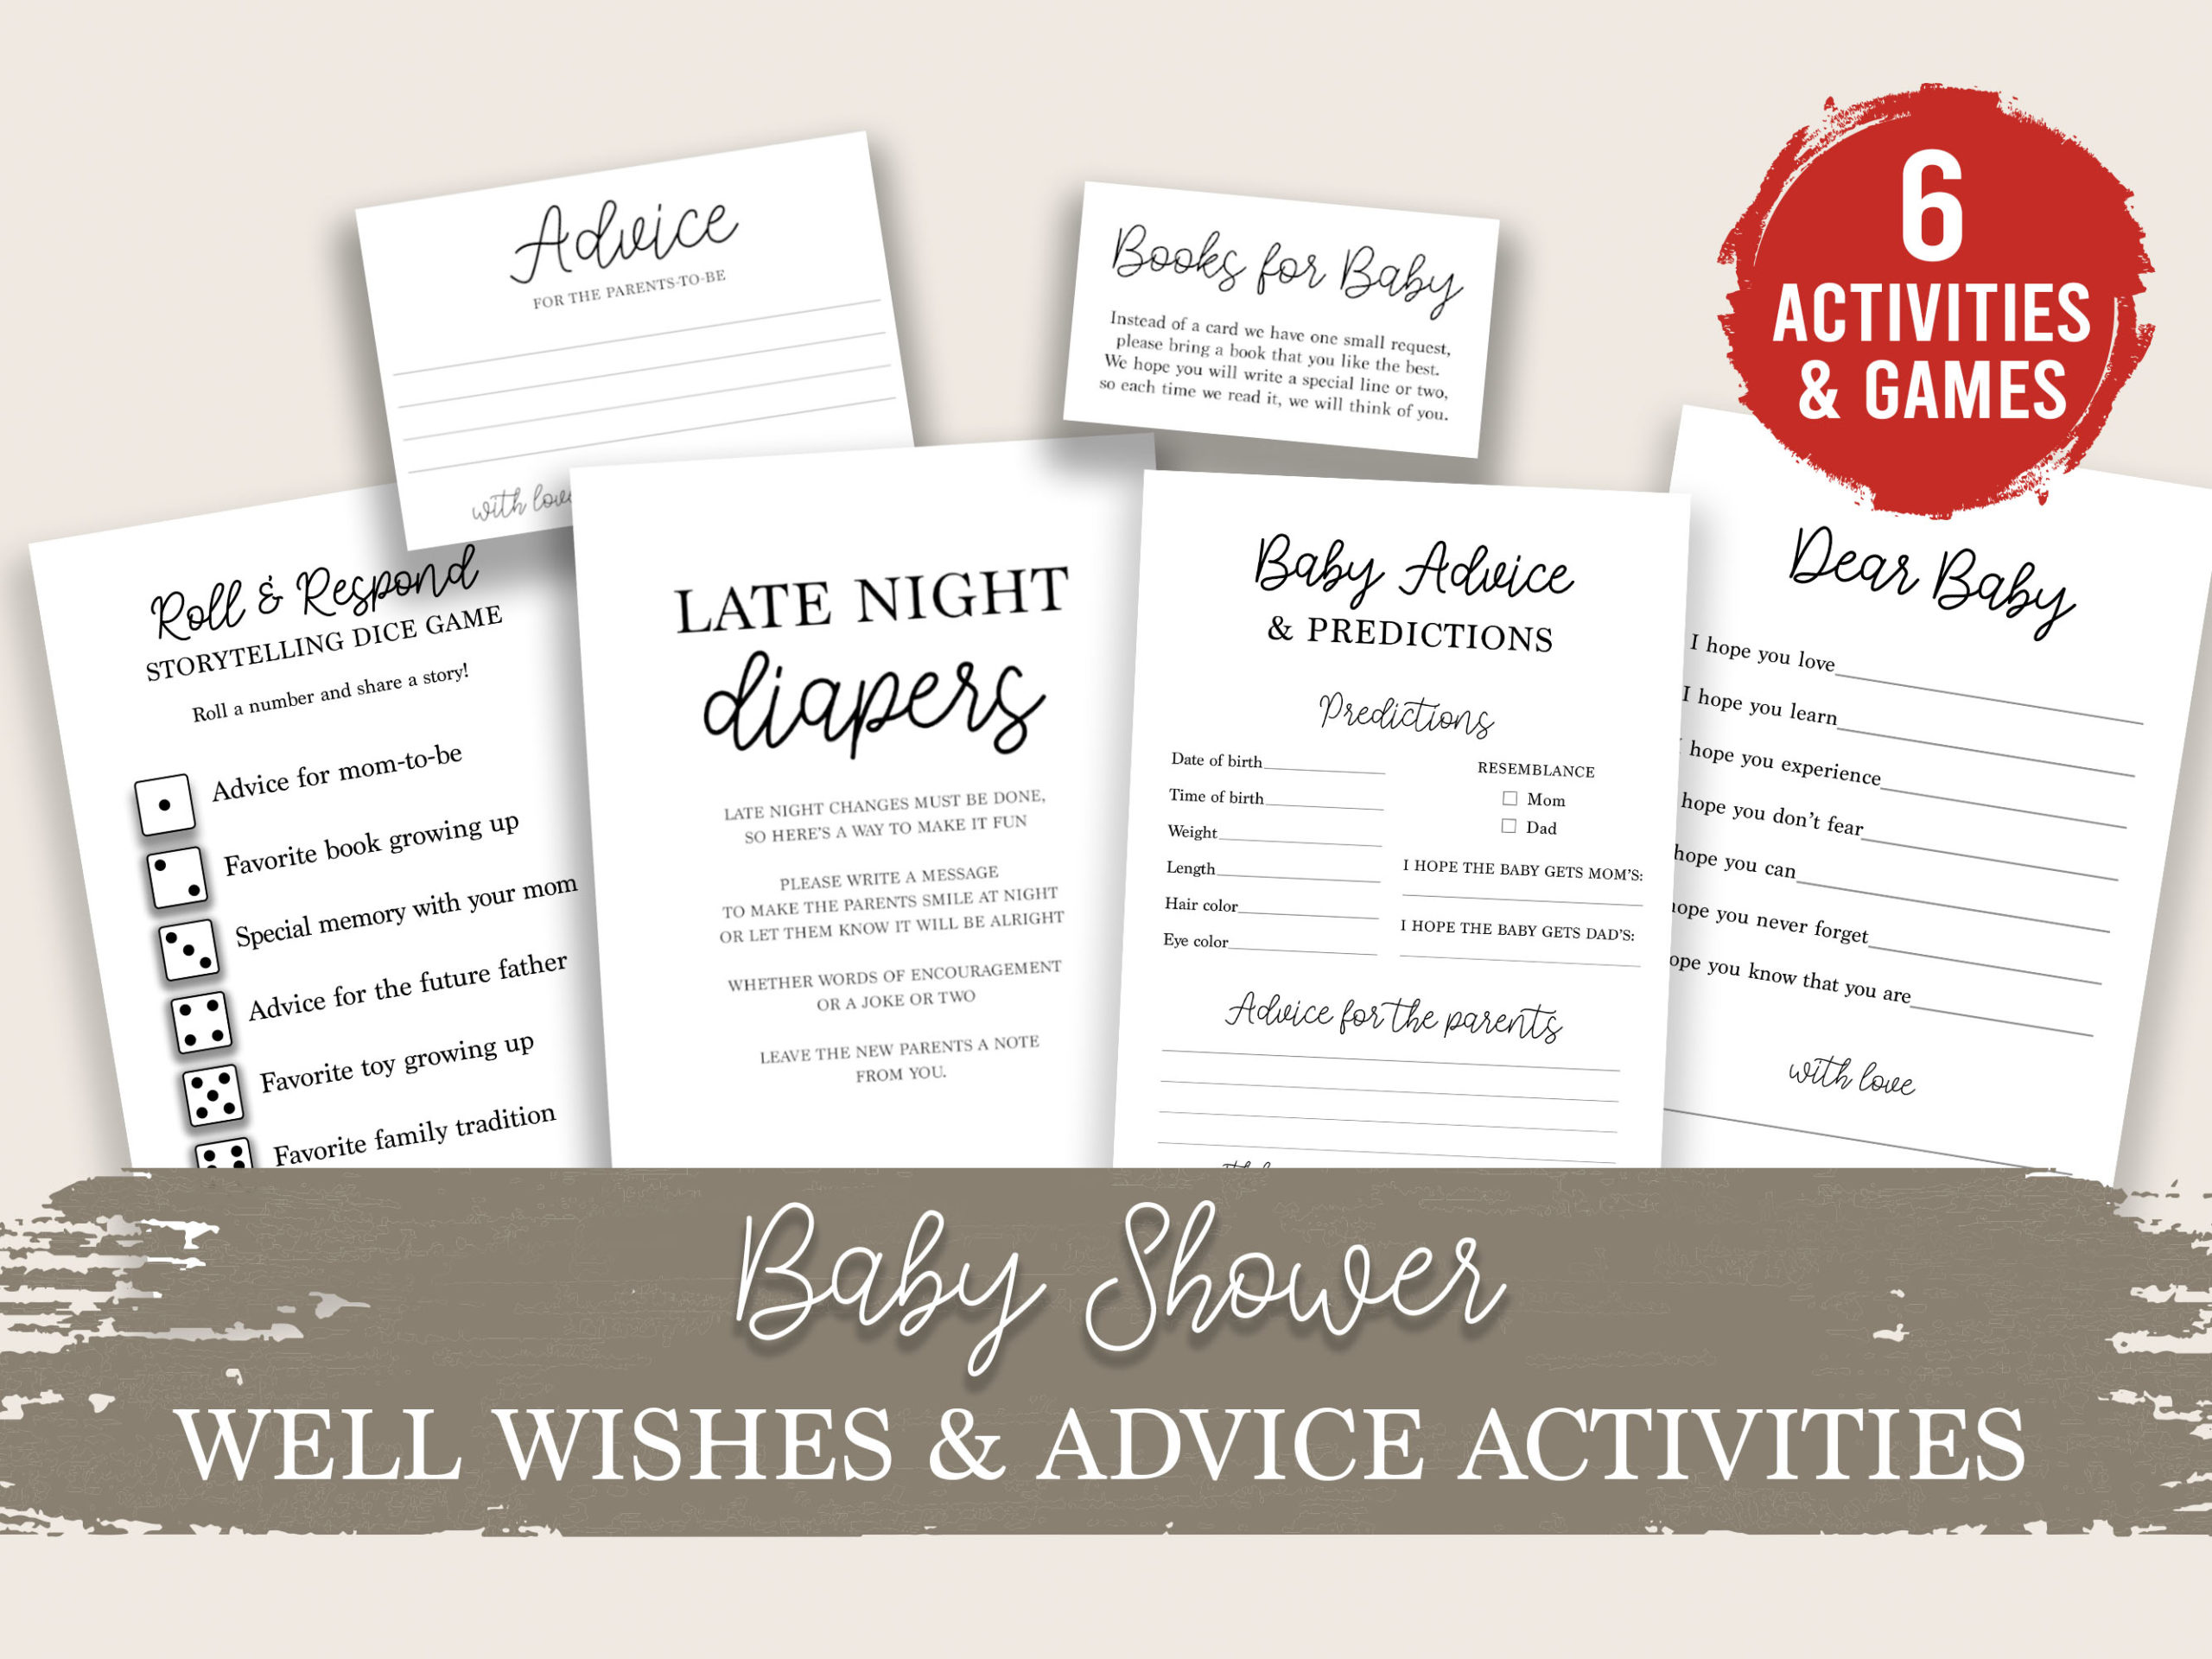 roll respond baby shower advice, storytelling activity